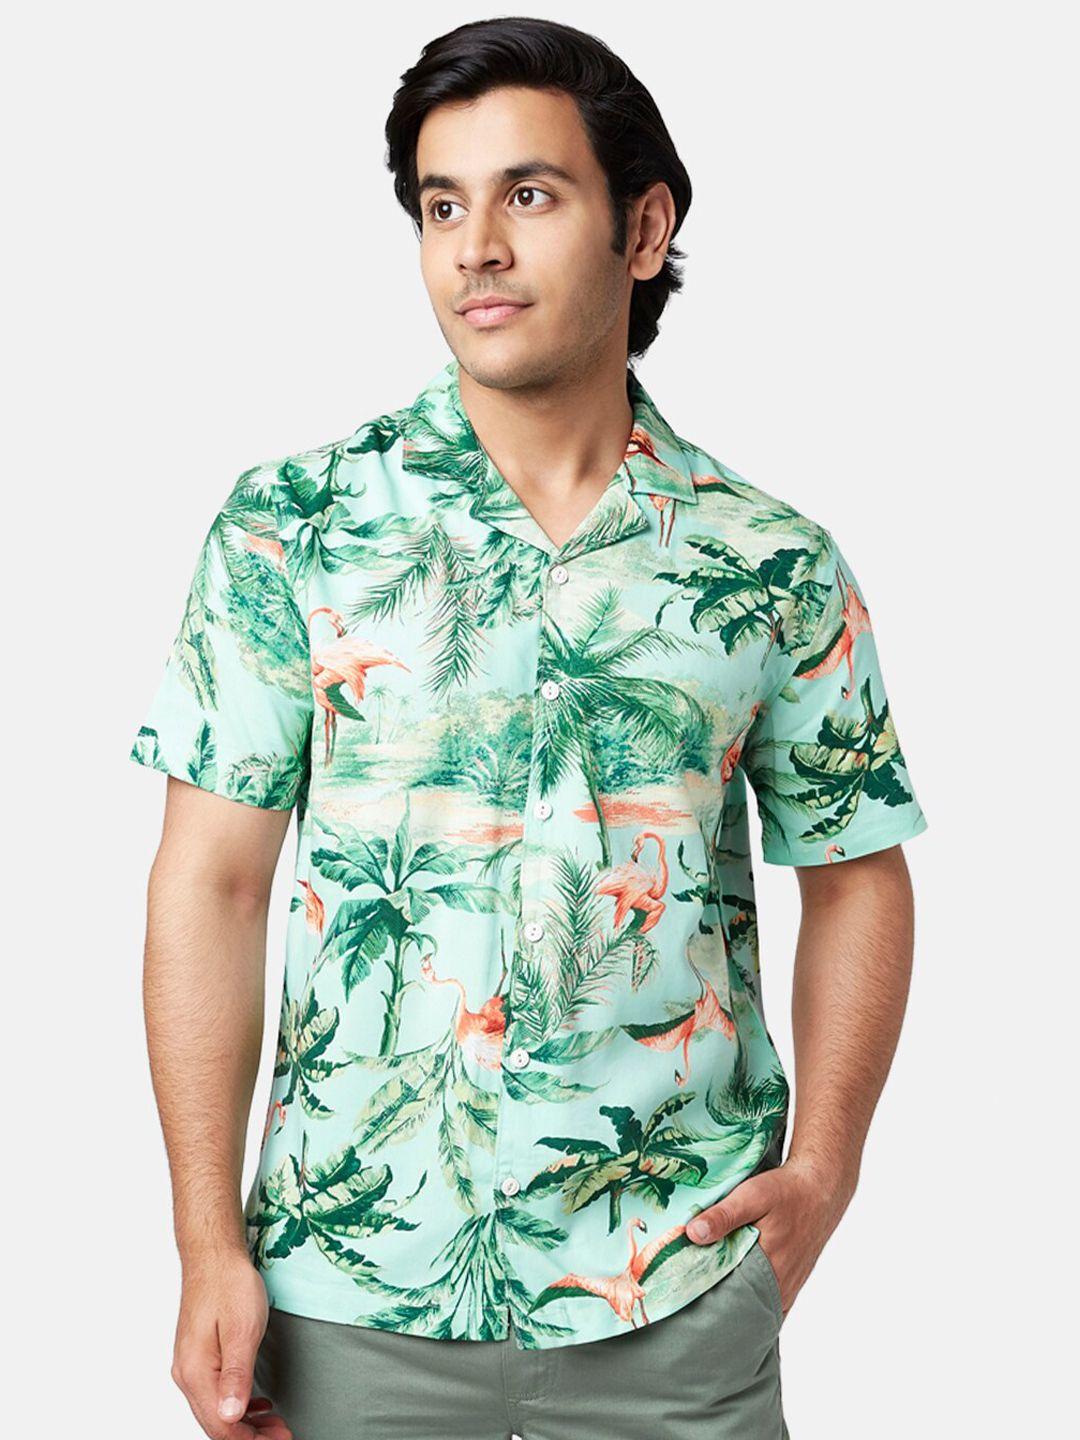 yu by pantaloons men multicoloured slim fit floral printed casual shirt